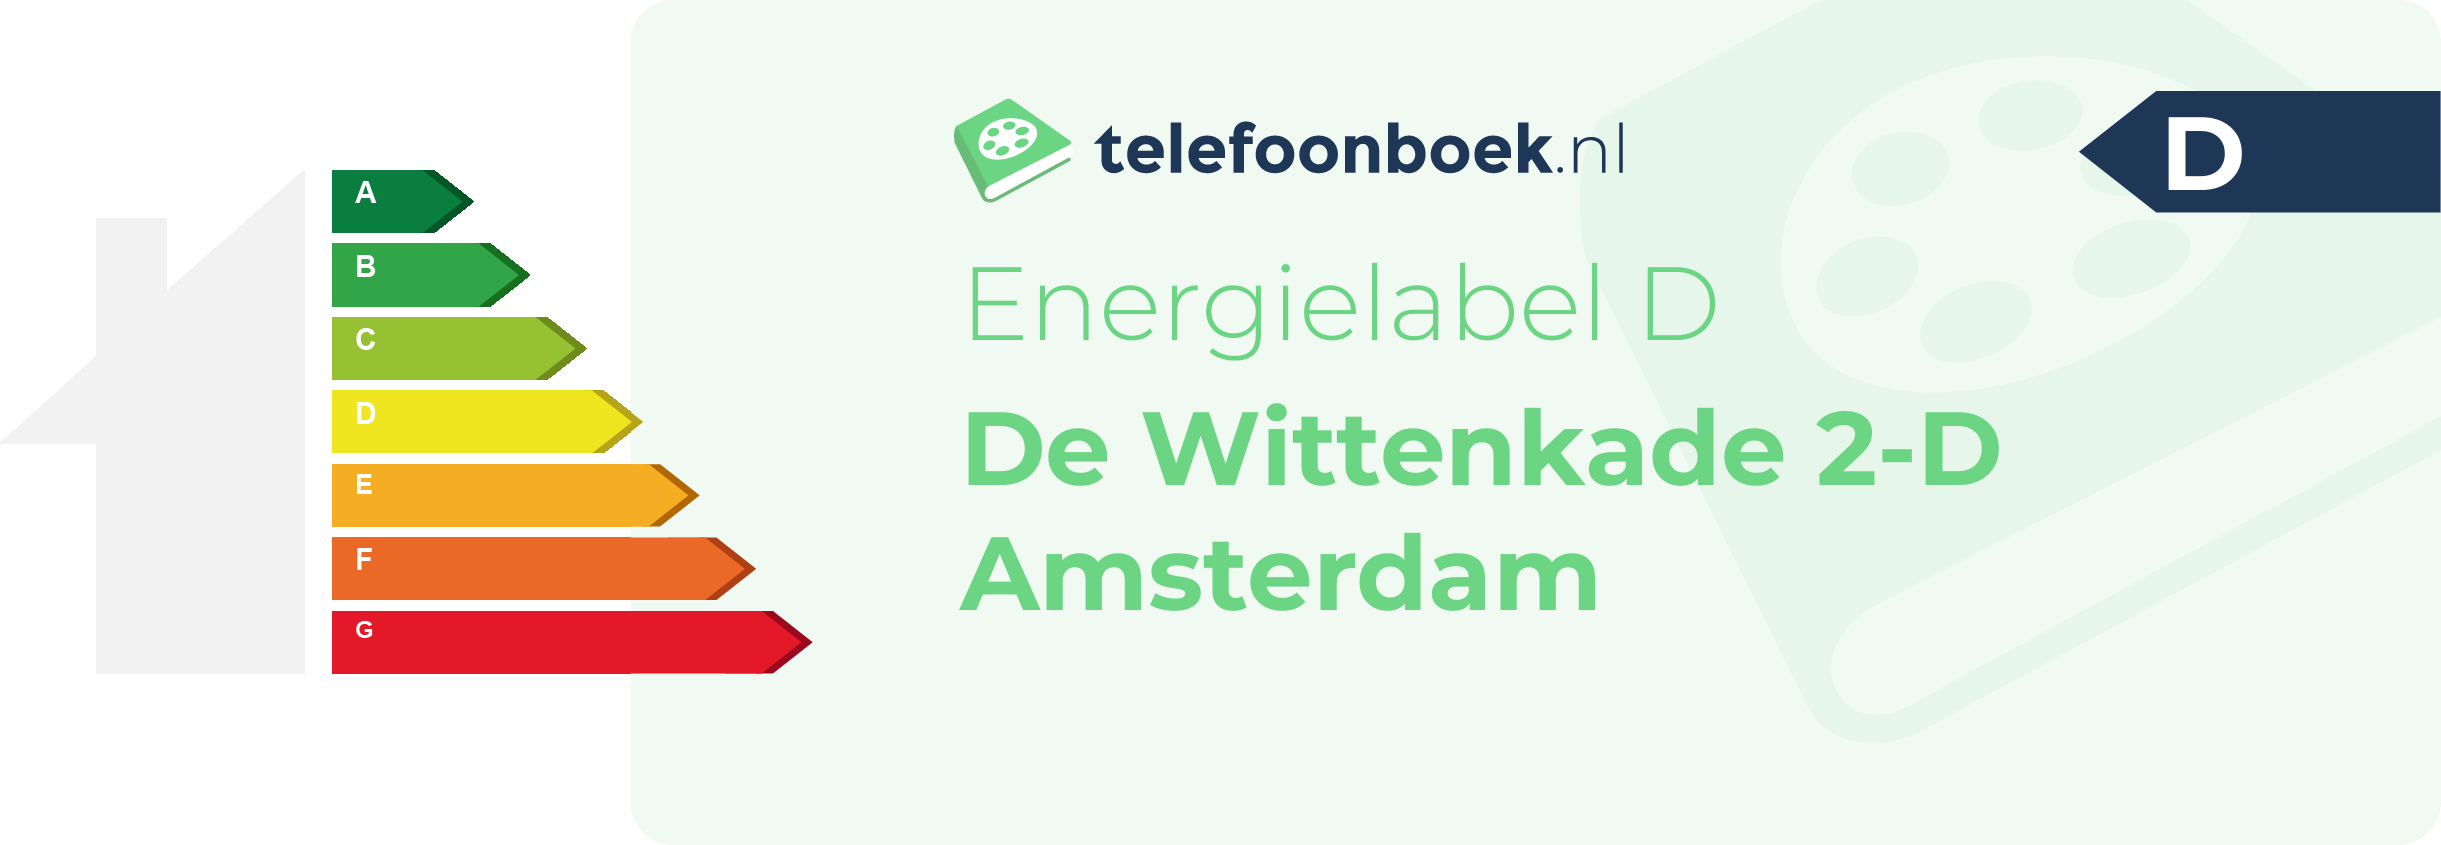 Energielabel De Wittenkade 2-D Amsterdam